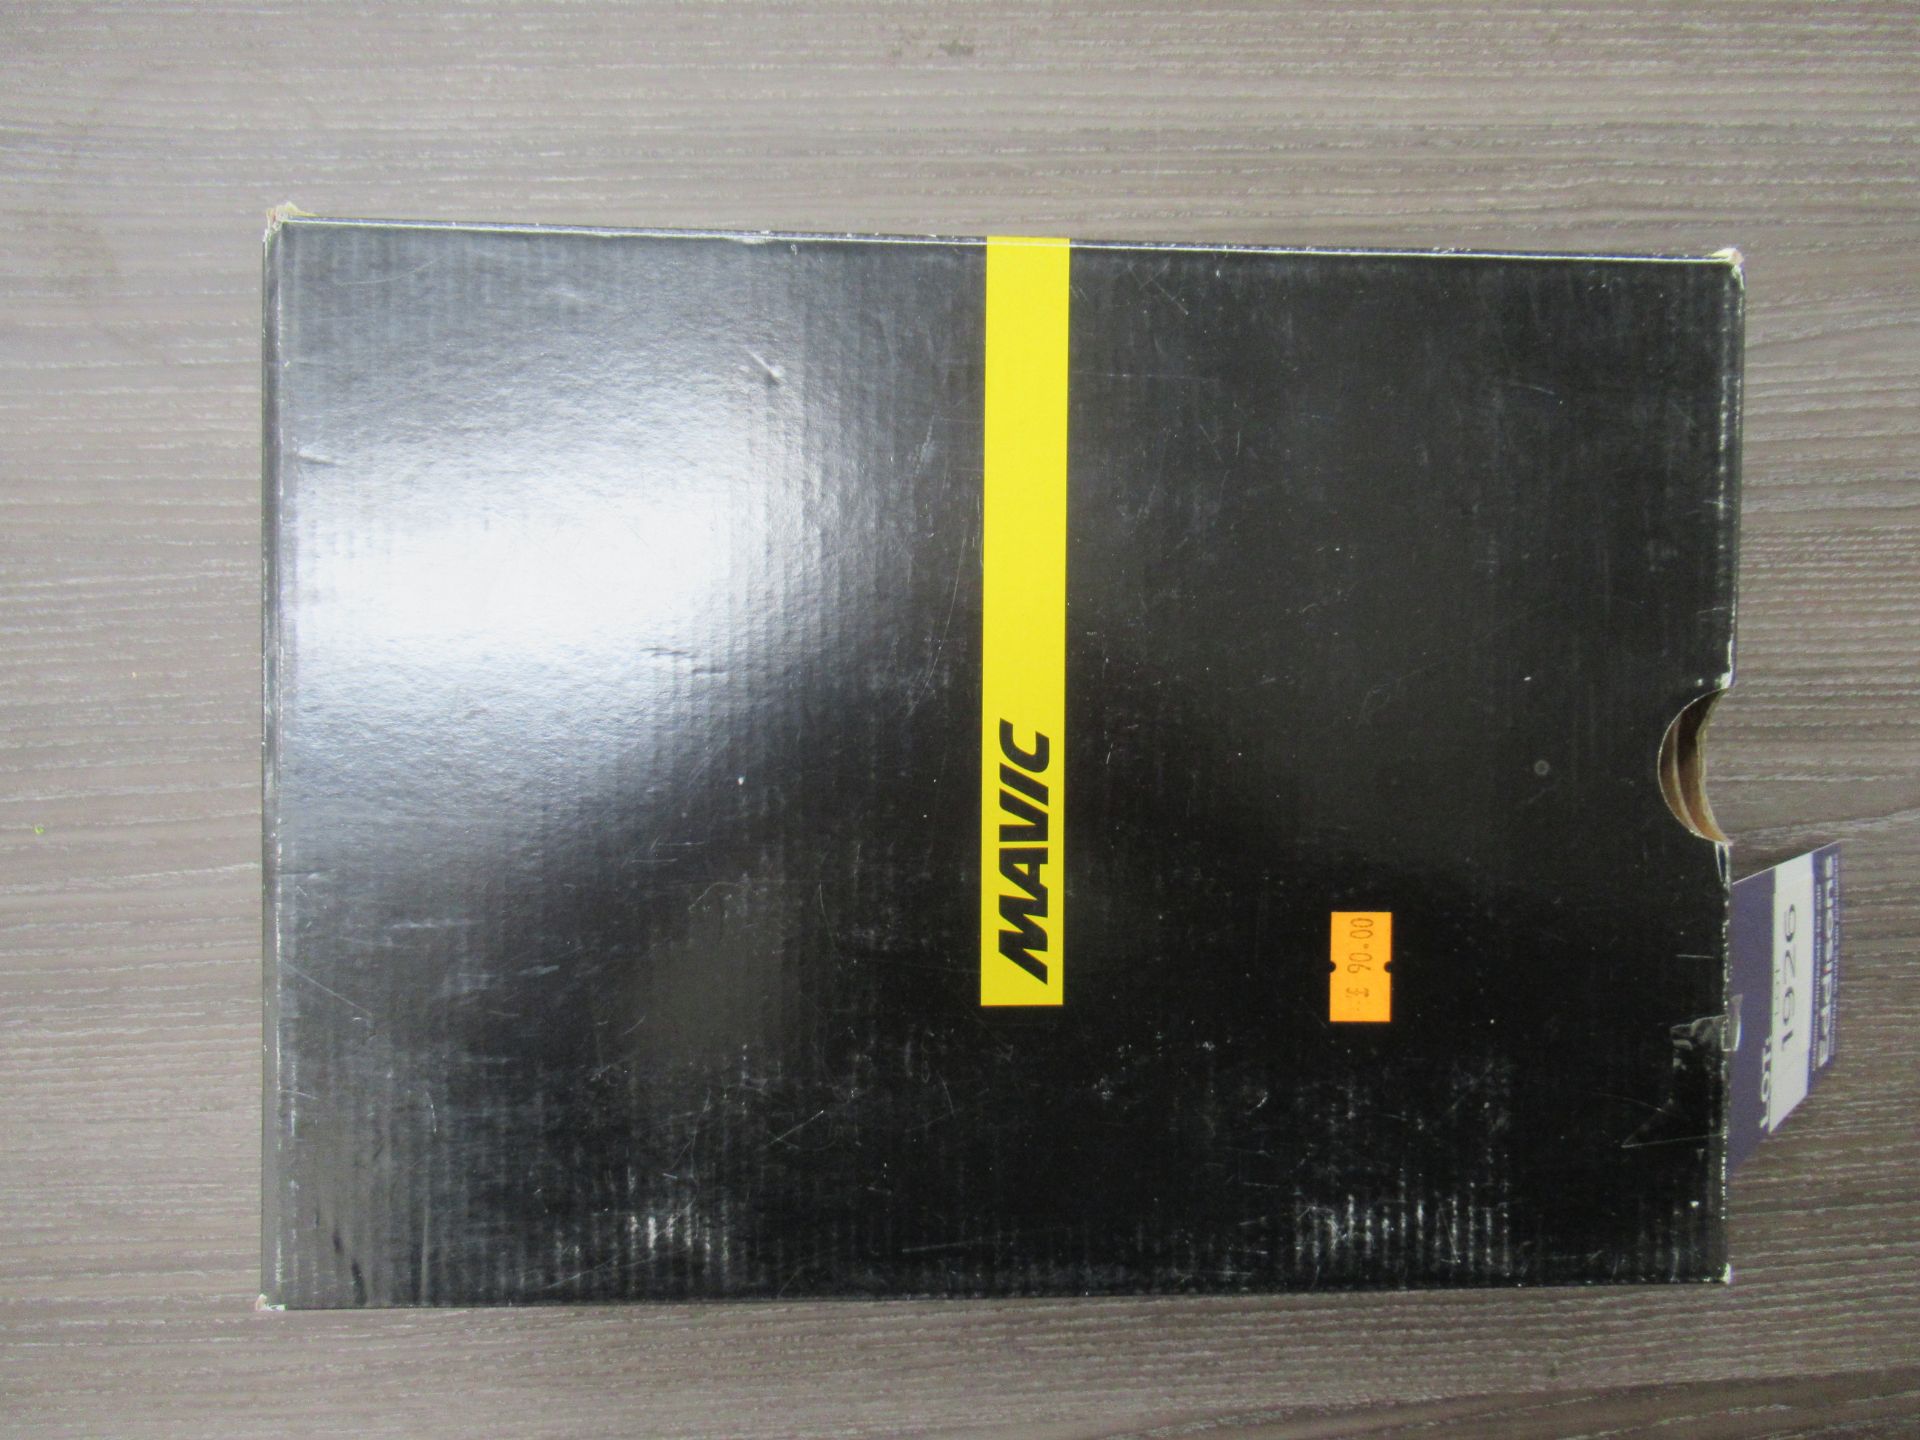 Pair of Mavic Crossmax cycling shoes (black/white/black) - boxed EU size 39 1/3 (RRP£90) - Image 2 of 4